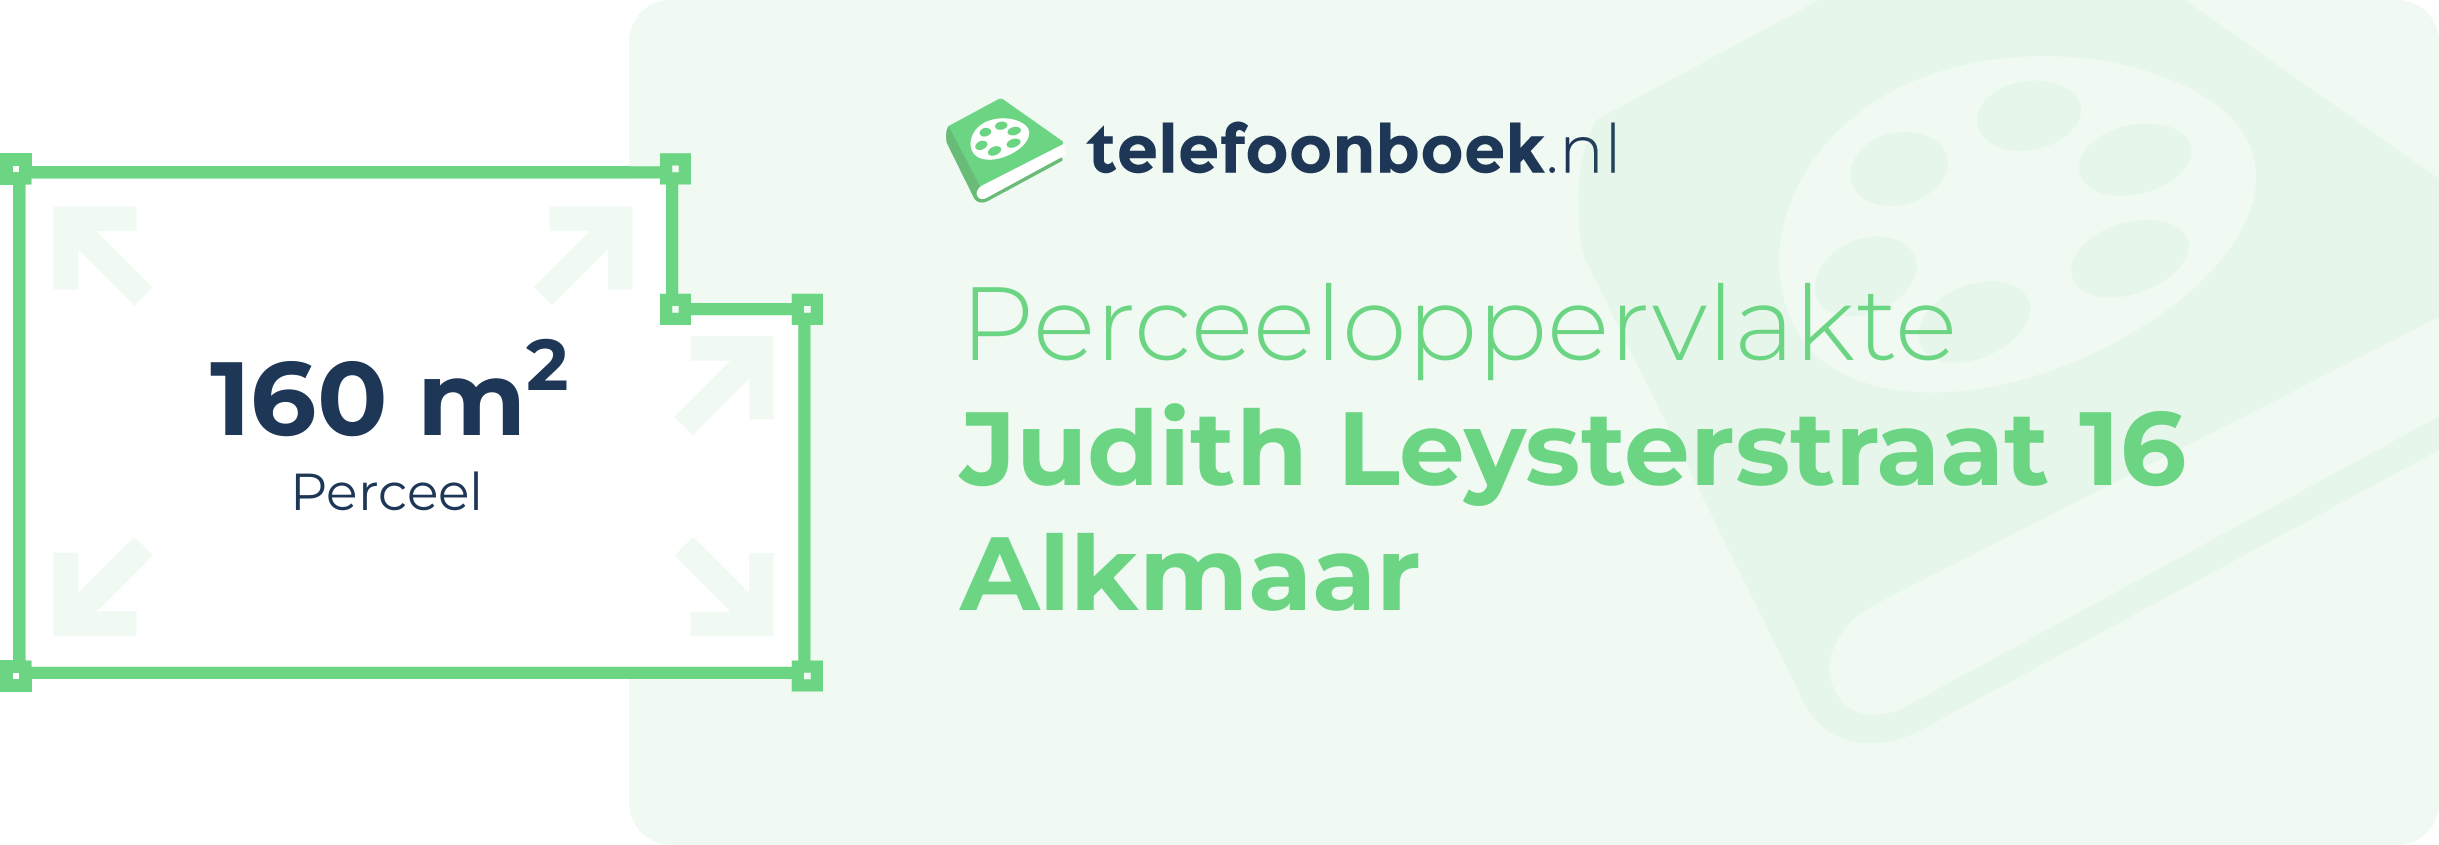 Perceeloppervlakte Judith Leysterstraat 16 Alkmaar